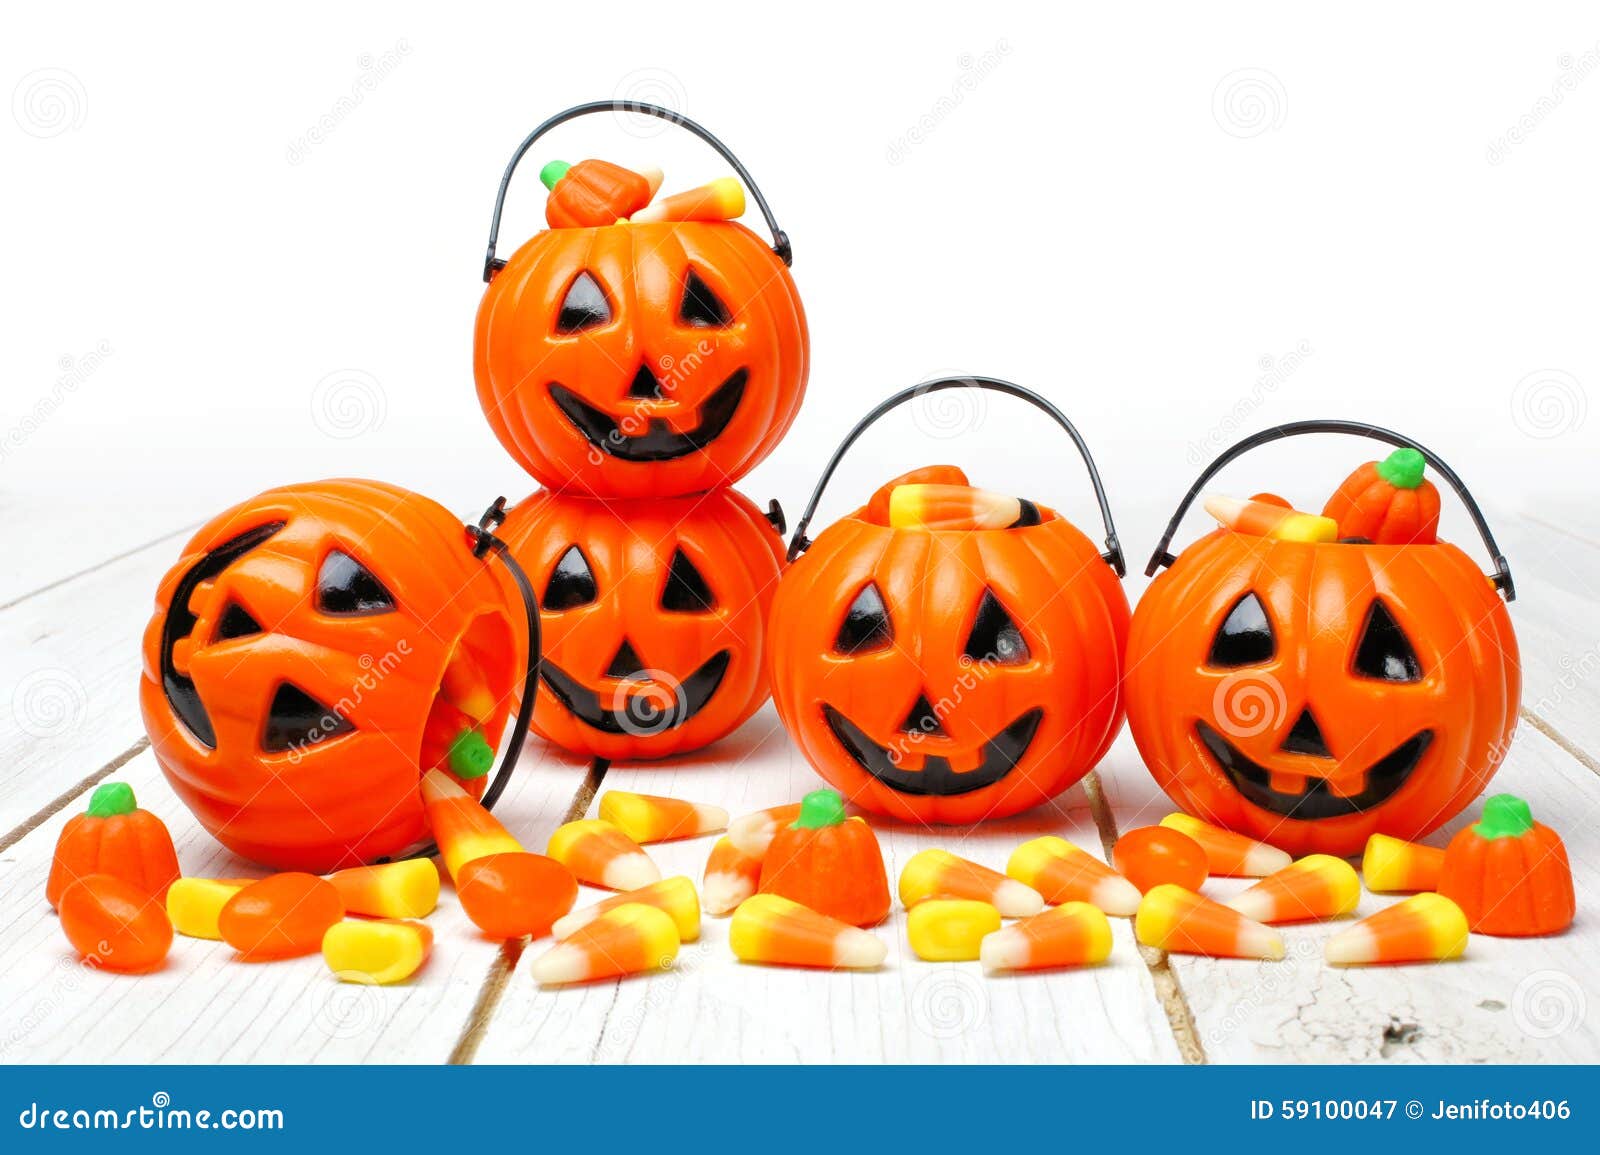 halloween jack o lantern candy holders on white wood